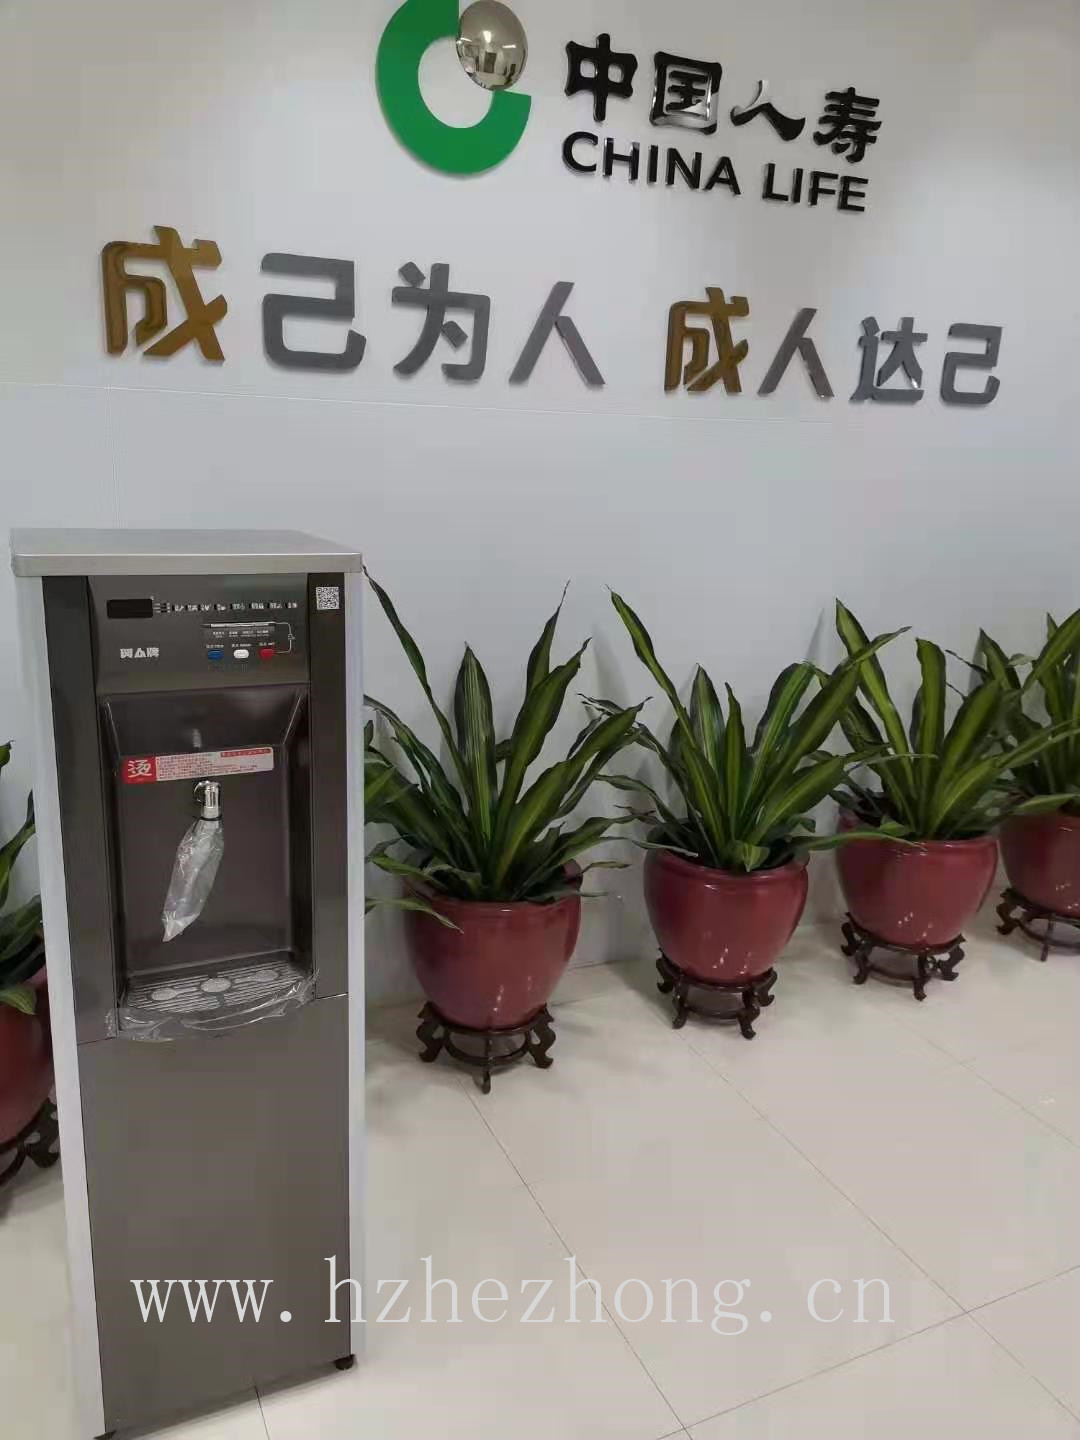 China Life Insurance uses hezhong water dispensers